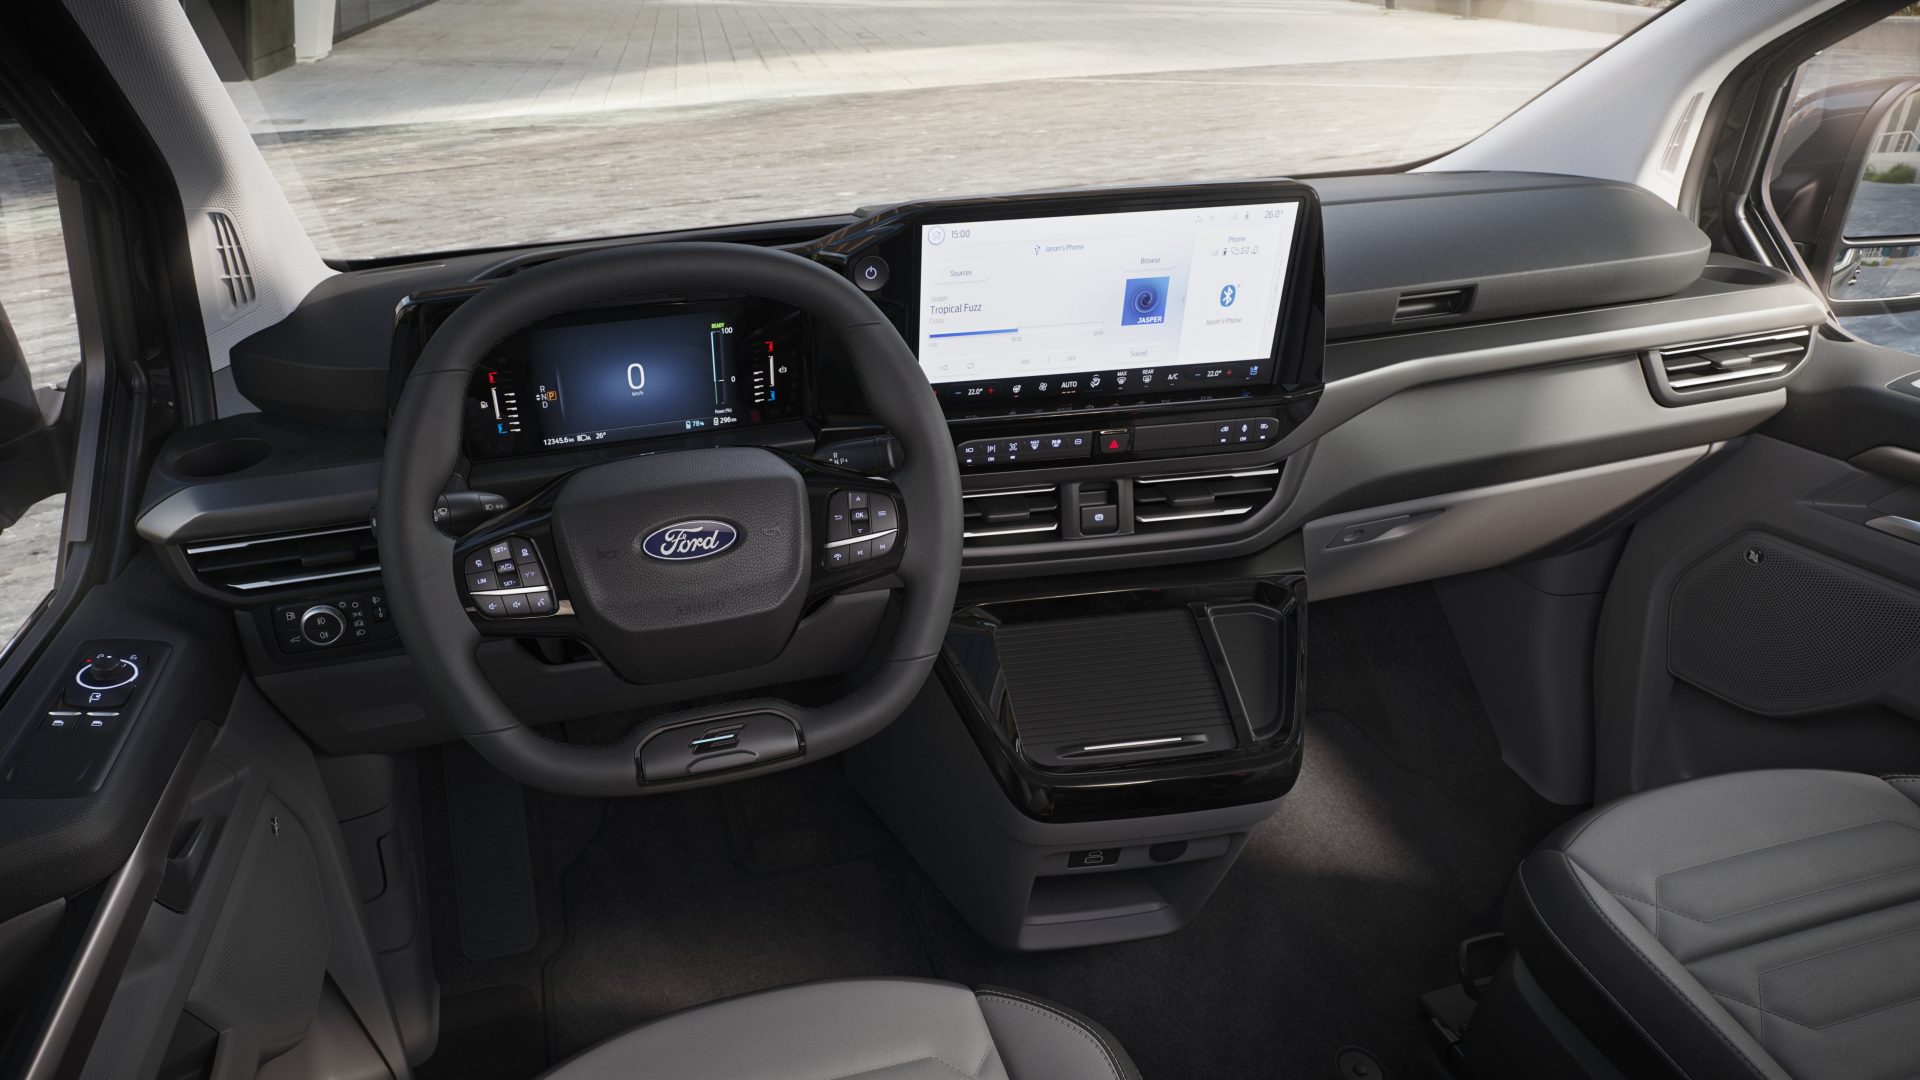 2022 FORD TOURNEO TITANIUM INTERIOR 04 Το νέο Ford Tourneo Custom προσφέρει εννέα θέσεις σε ένα εξαιρετικά διαμορφώσιμο εσωτερικό